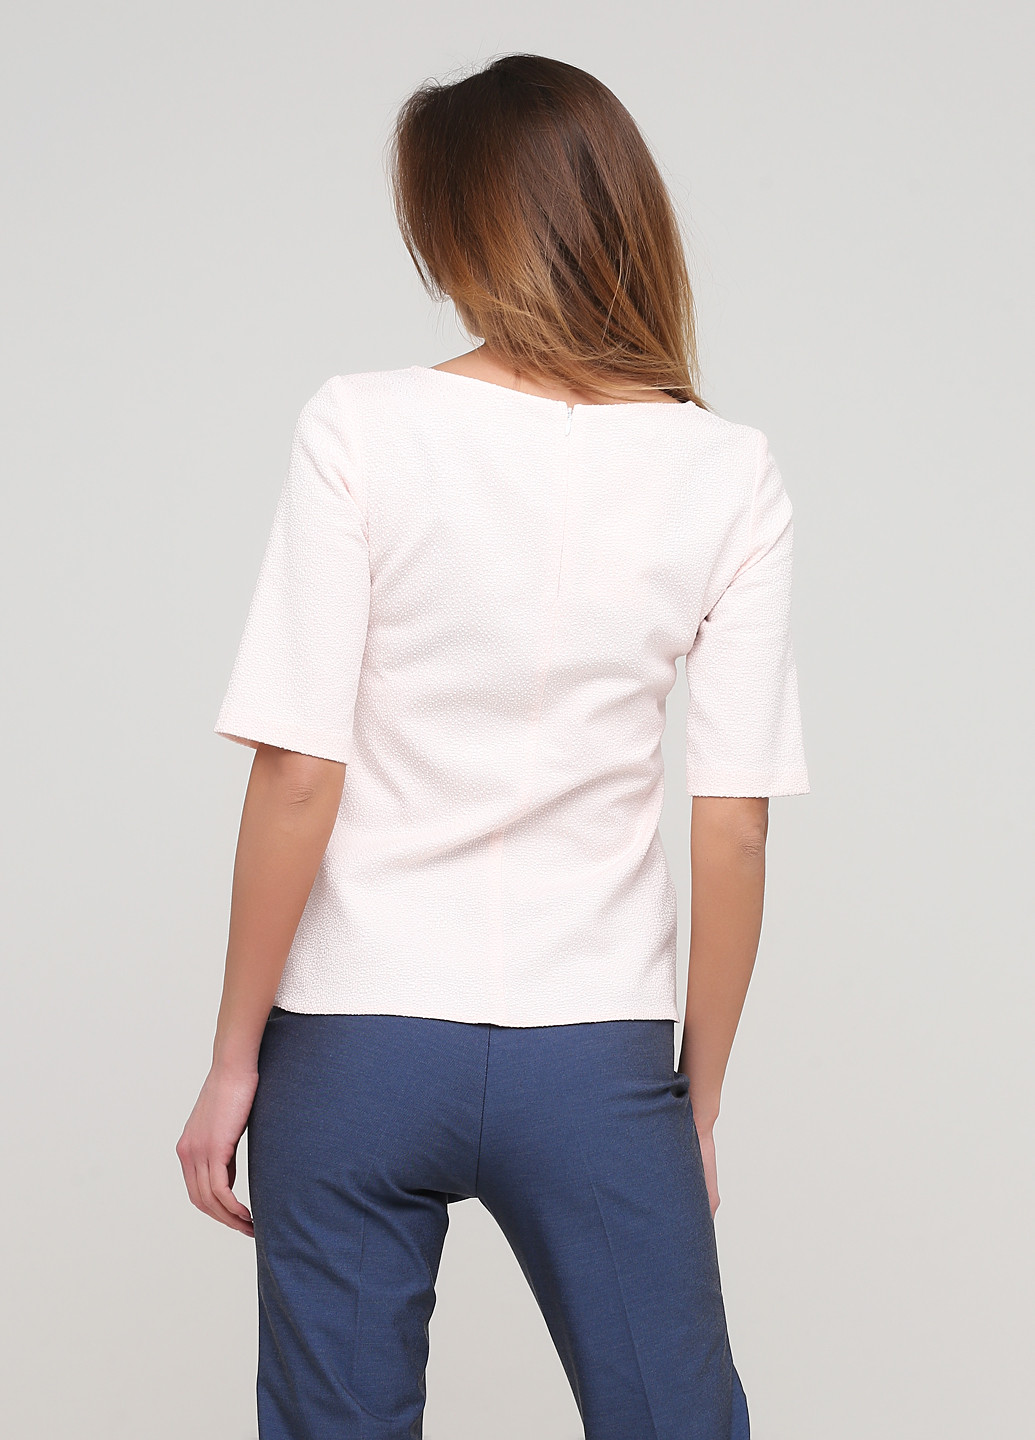 Светло-розовая демисезонная блуза Olga Shyrai for PUBLIC&PRIVATE